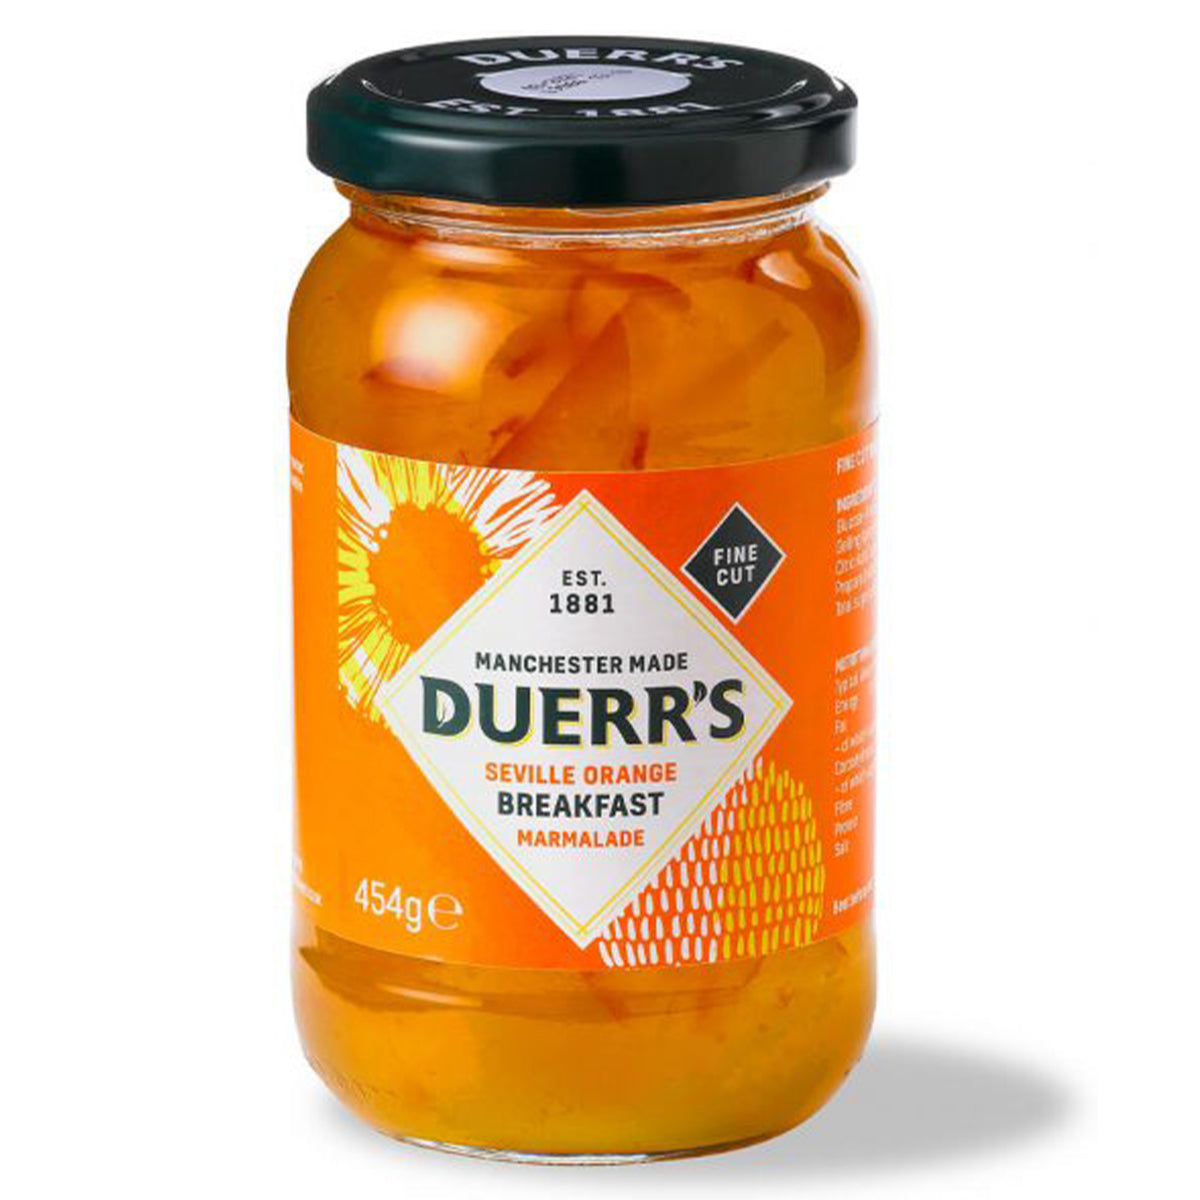 A jar of Duerrs - Seville Orange Mamalade - 454g breakfast pickles.